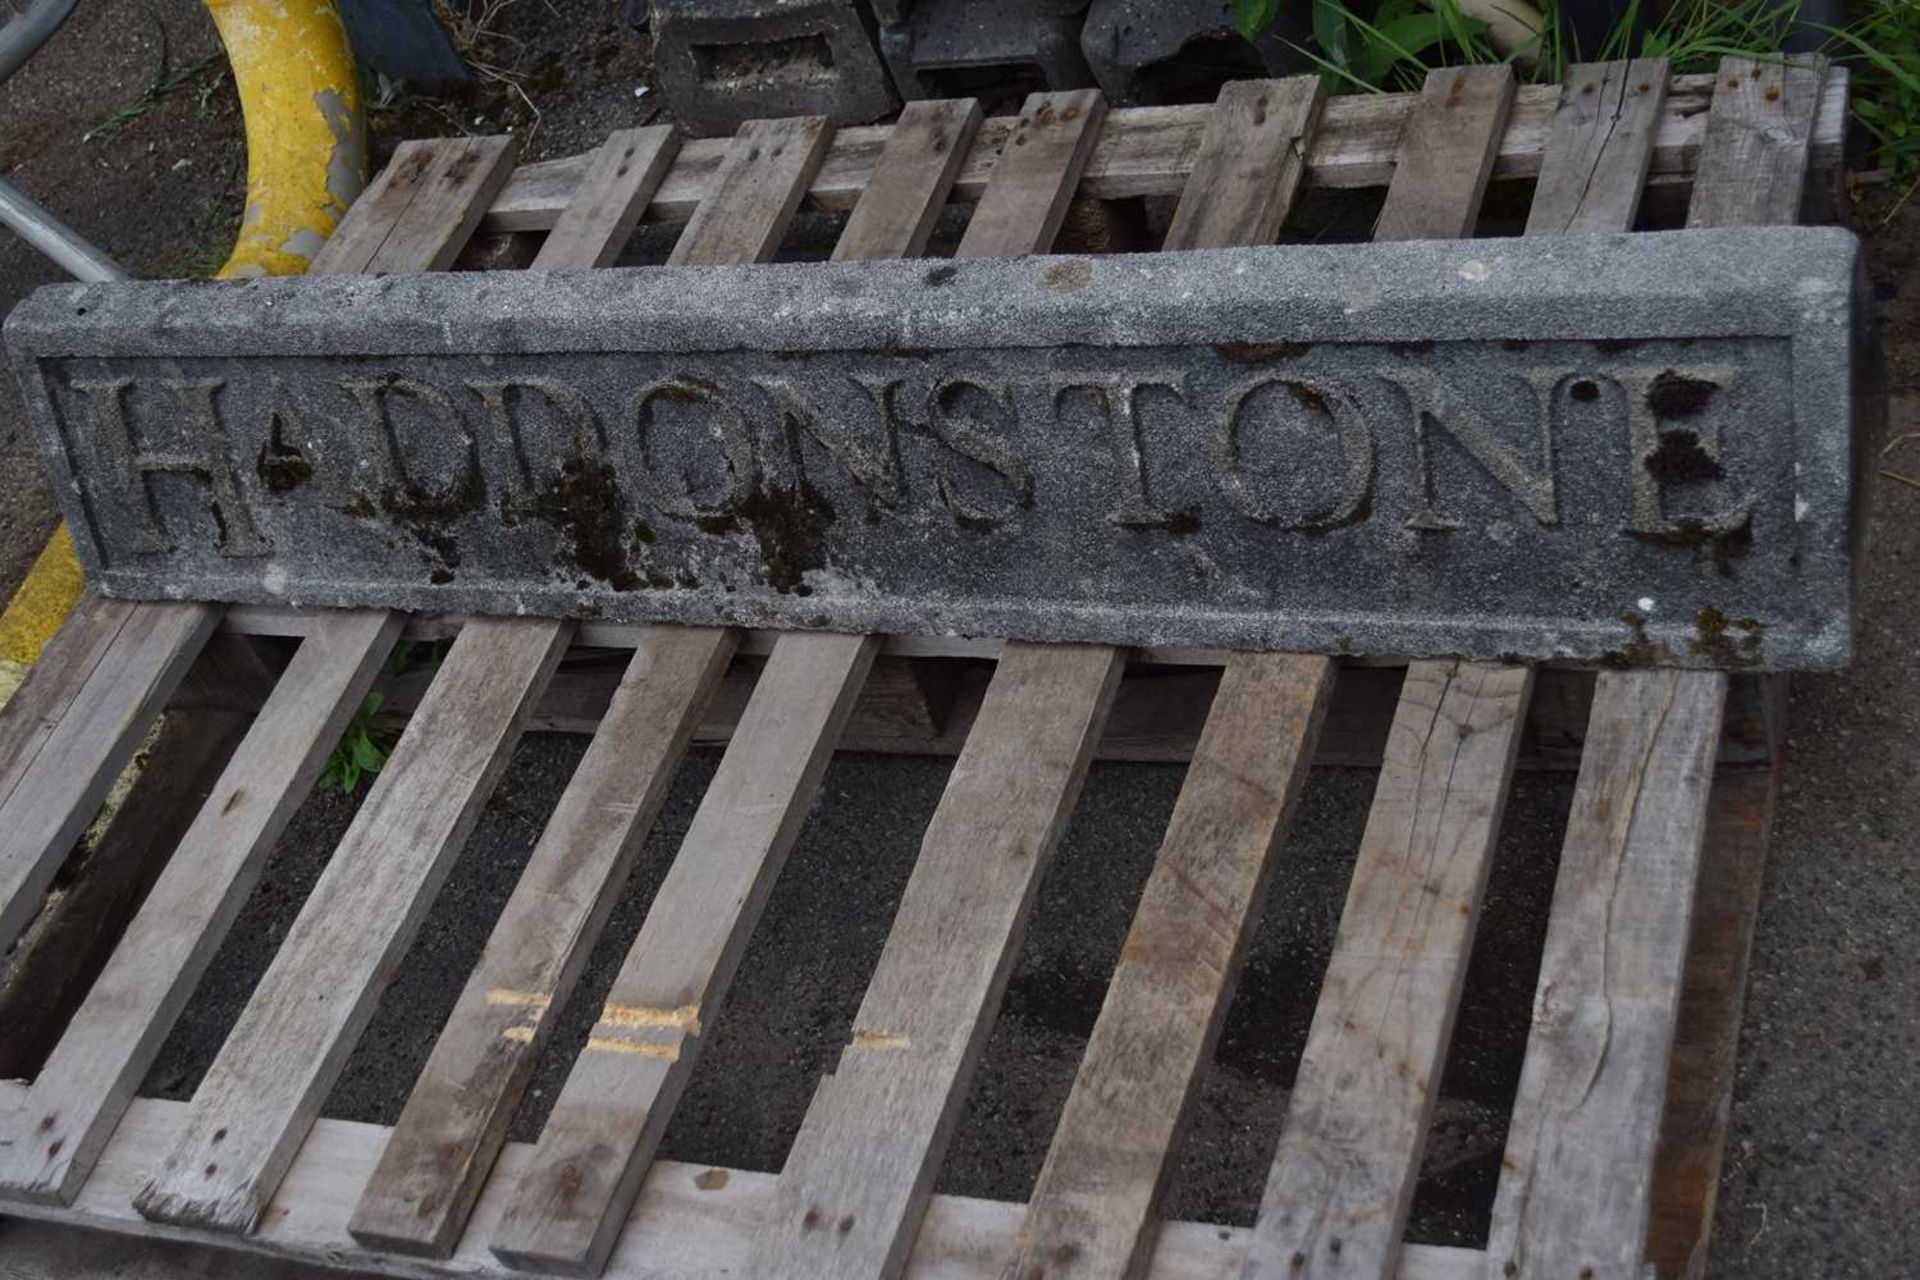 Haddonstone cast stone plaque/advertising sign, width 125cm